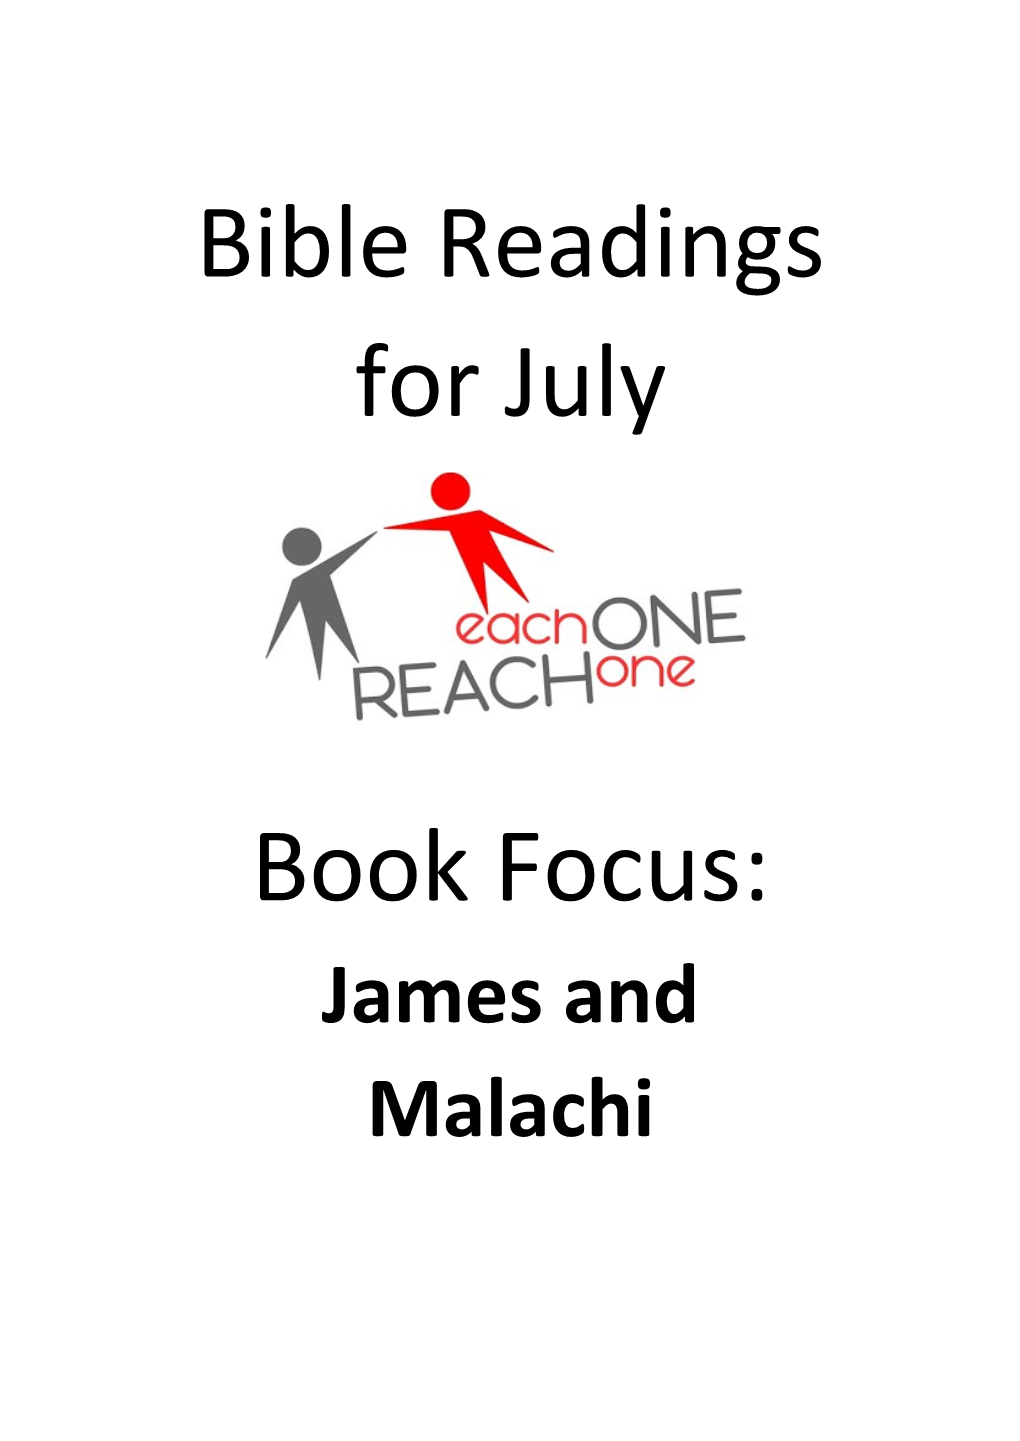 Book Focus: James and Malachi